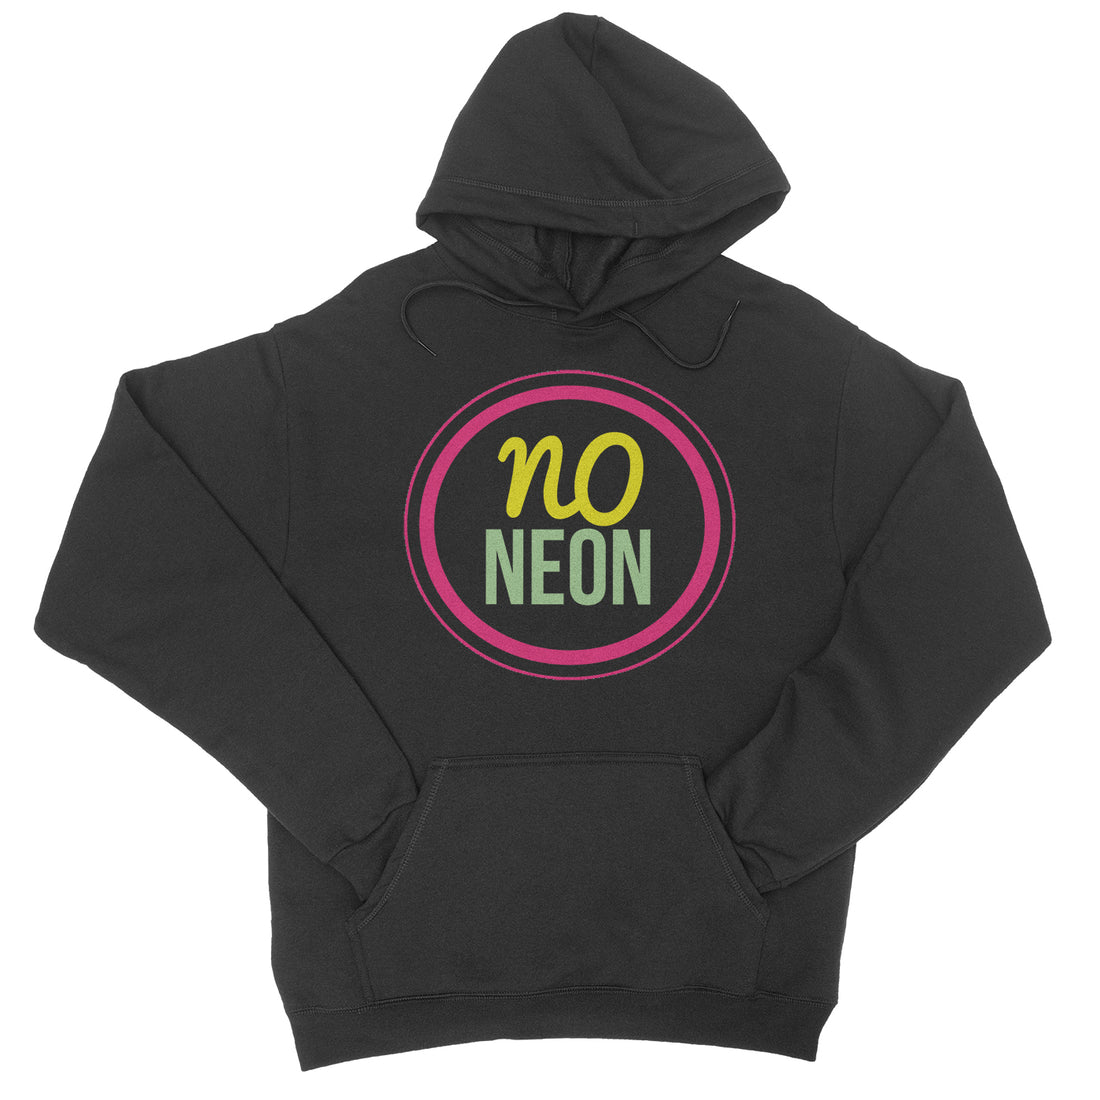 No Neon - Paint It Black - Black Pullover Hoodie